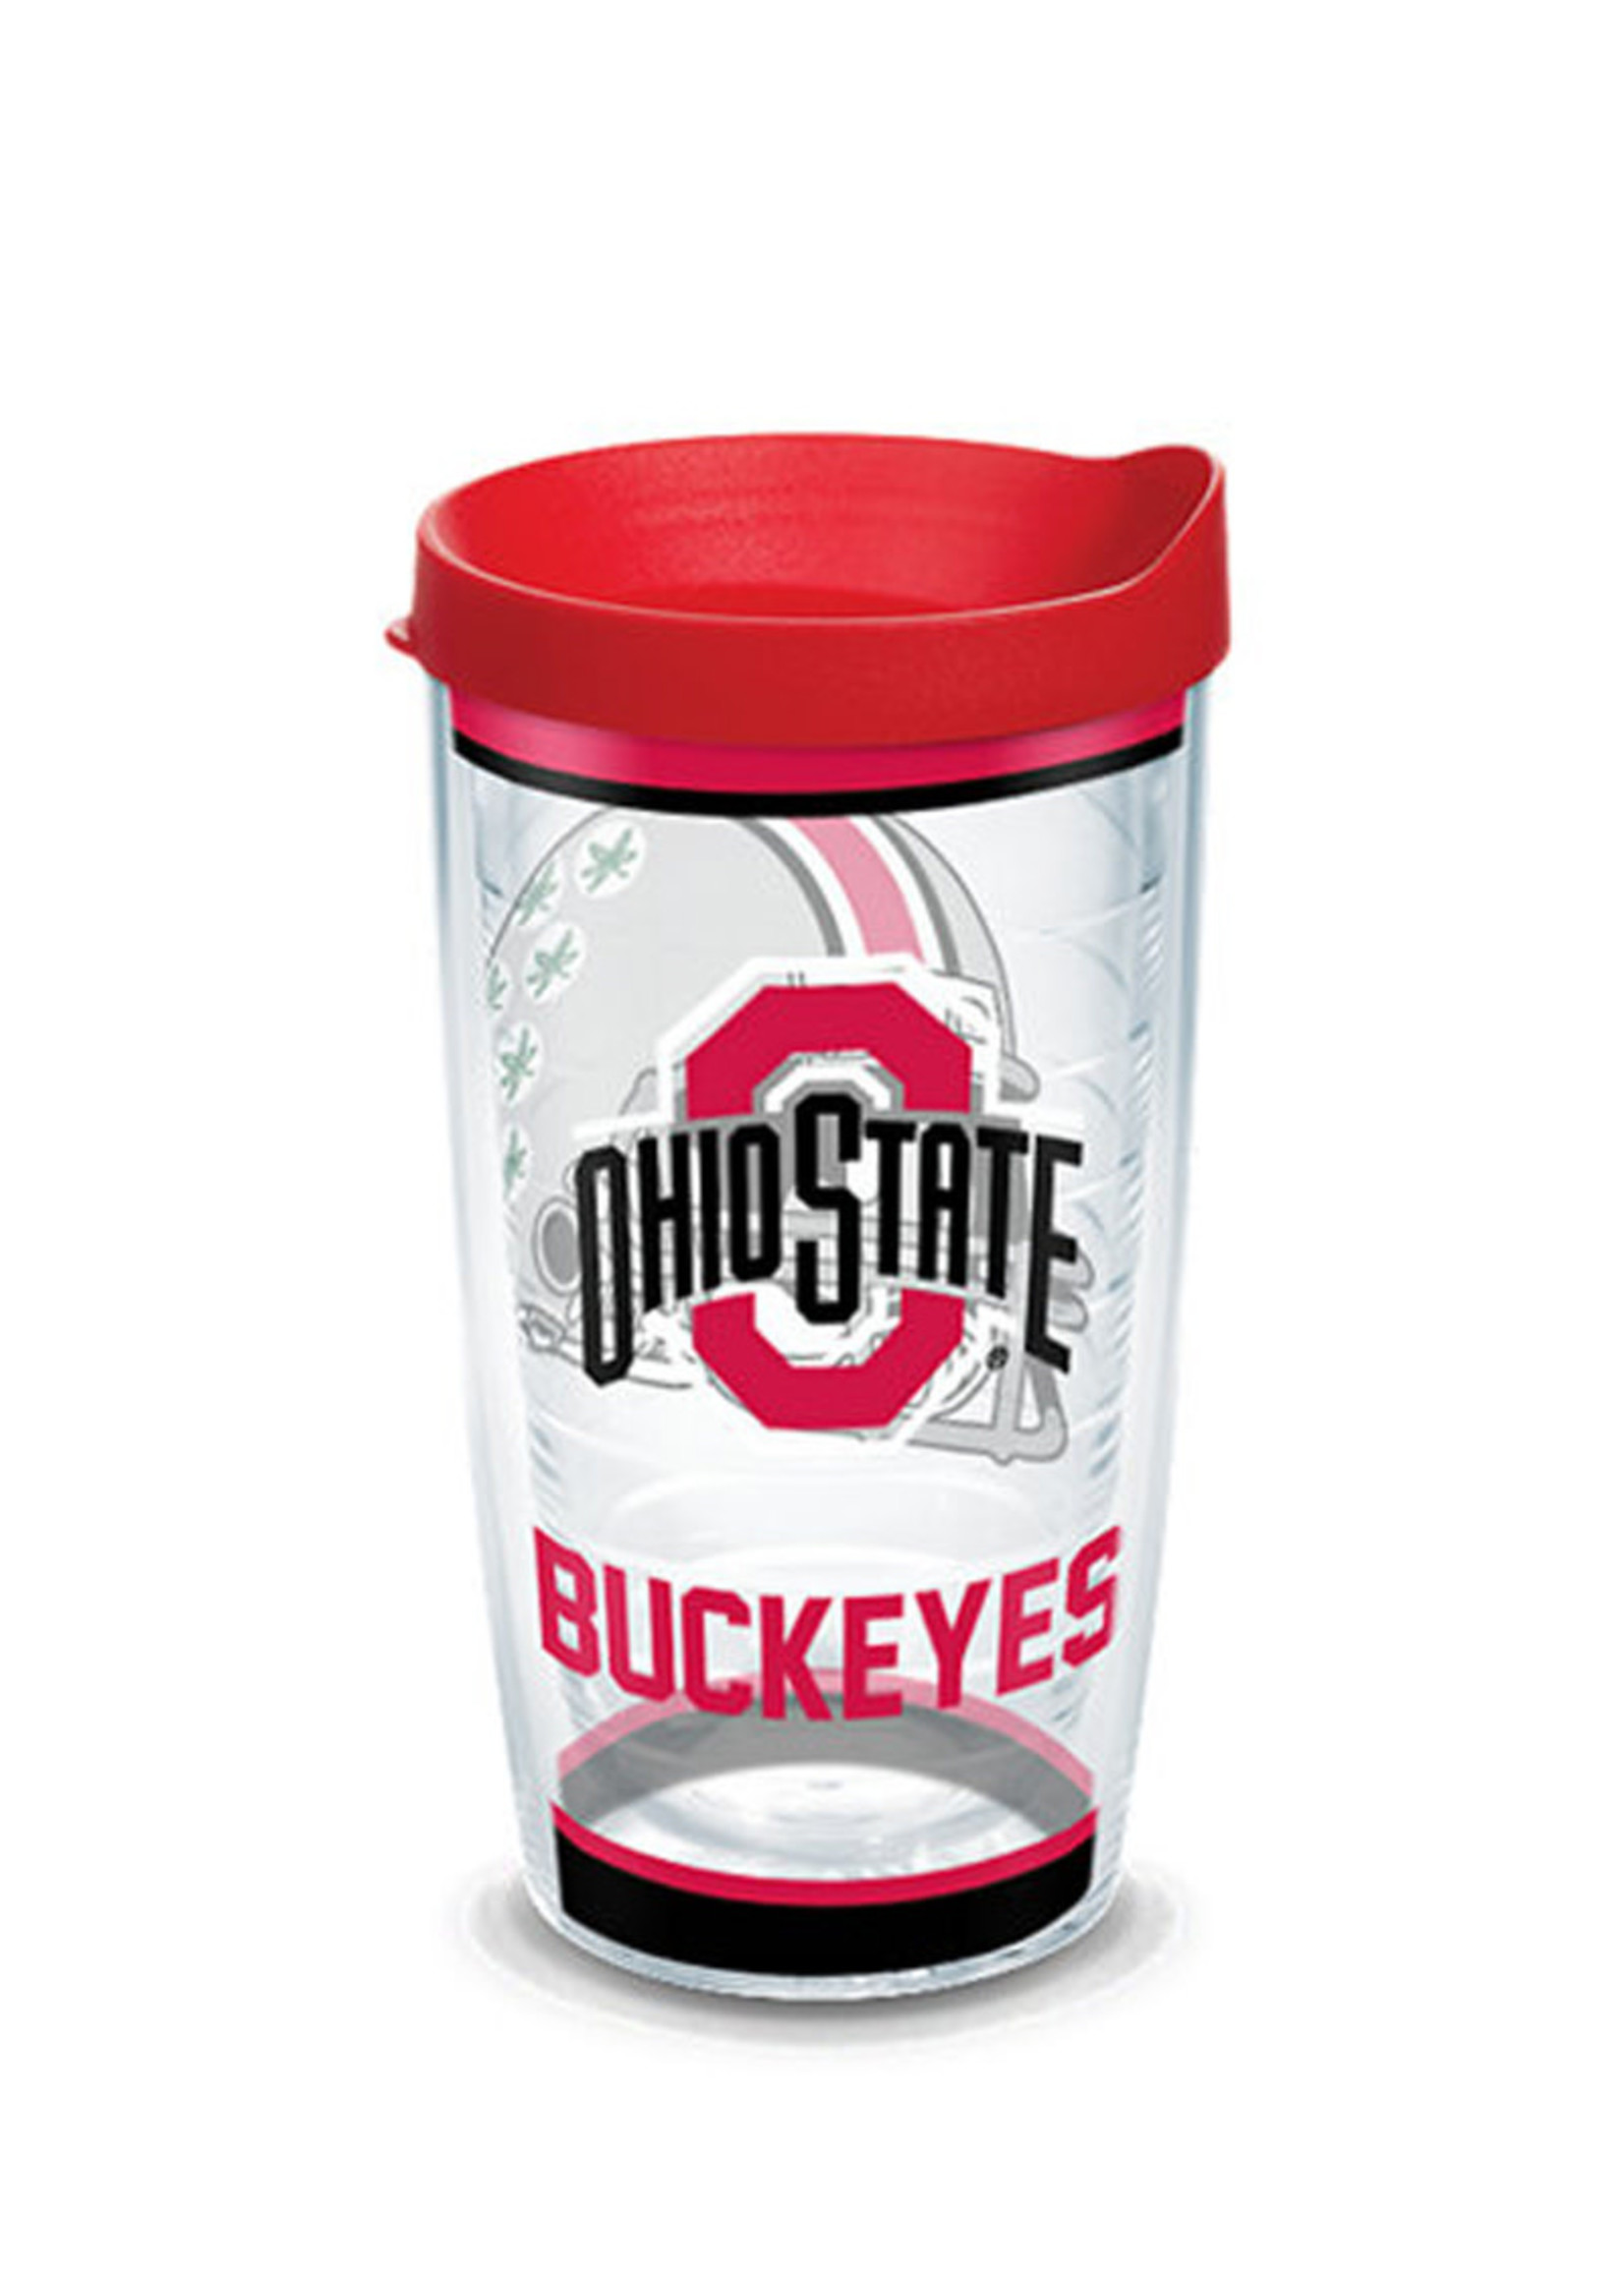 Ohio State Buckeyes Travel Mug Tumbler Plastic with Lid - 16 Oz.